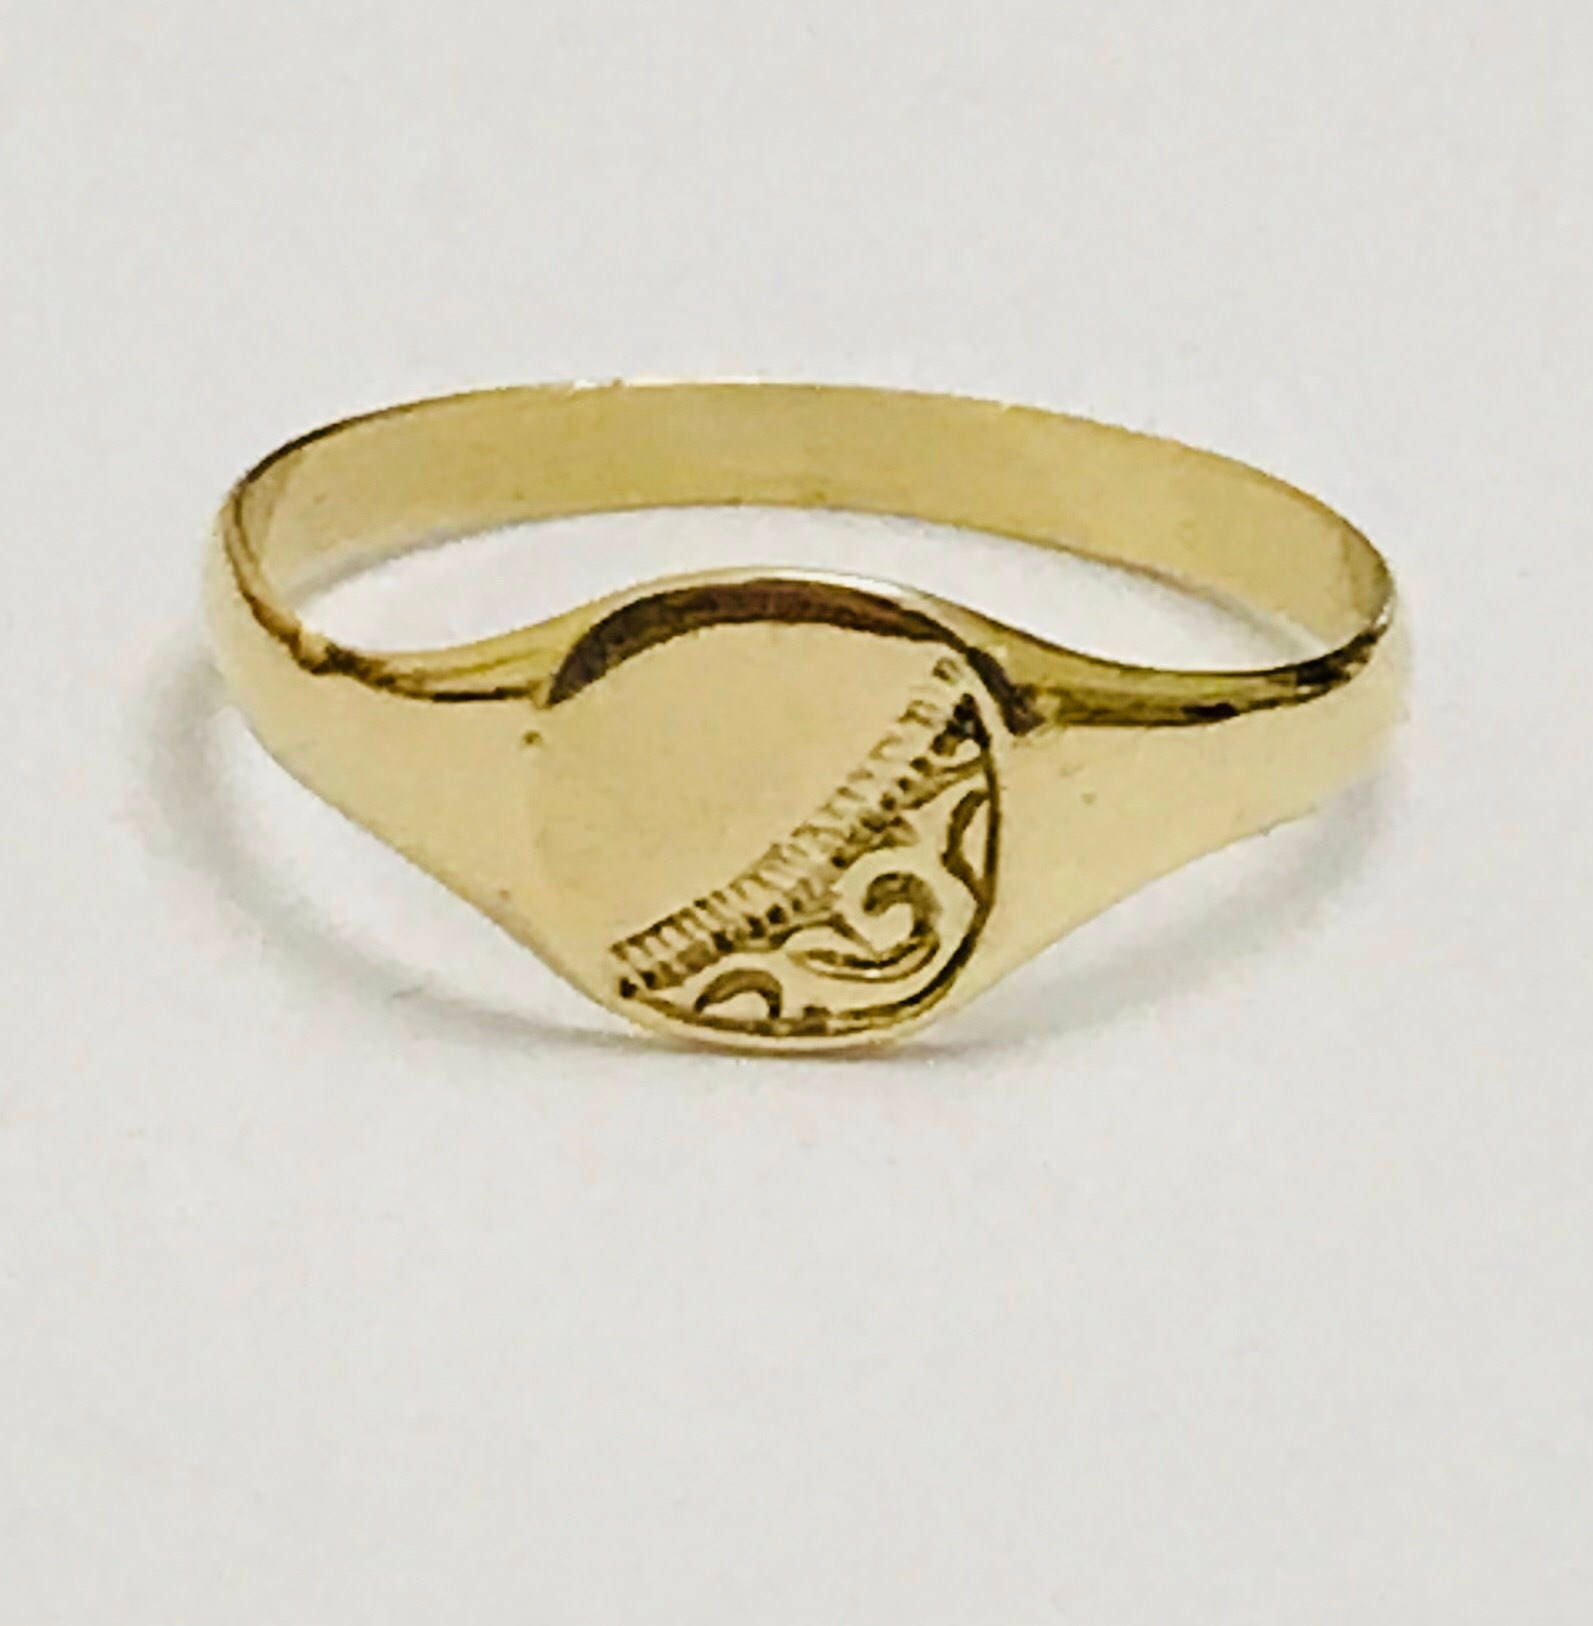 Vintage 9ct yellow gold ladies signet or pinky ring